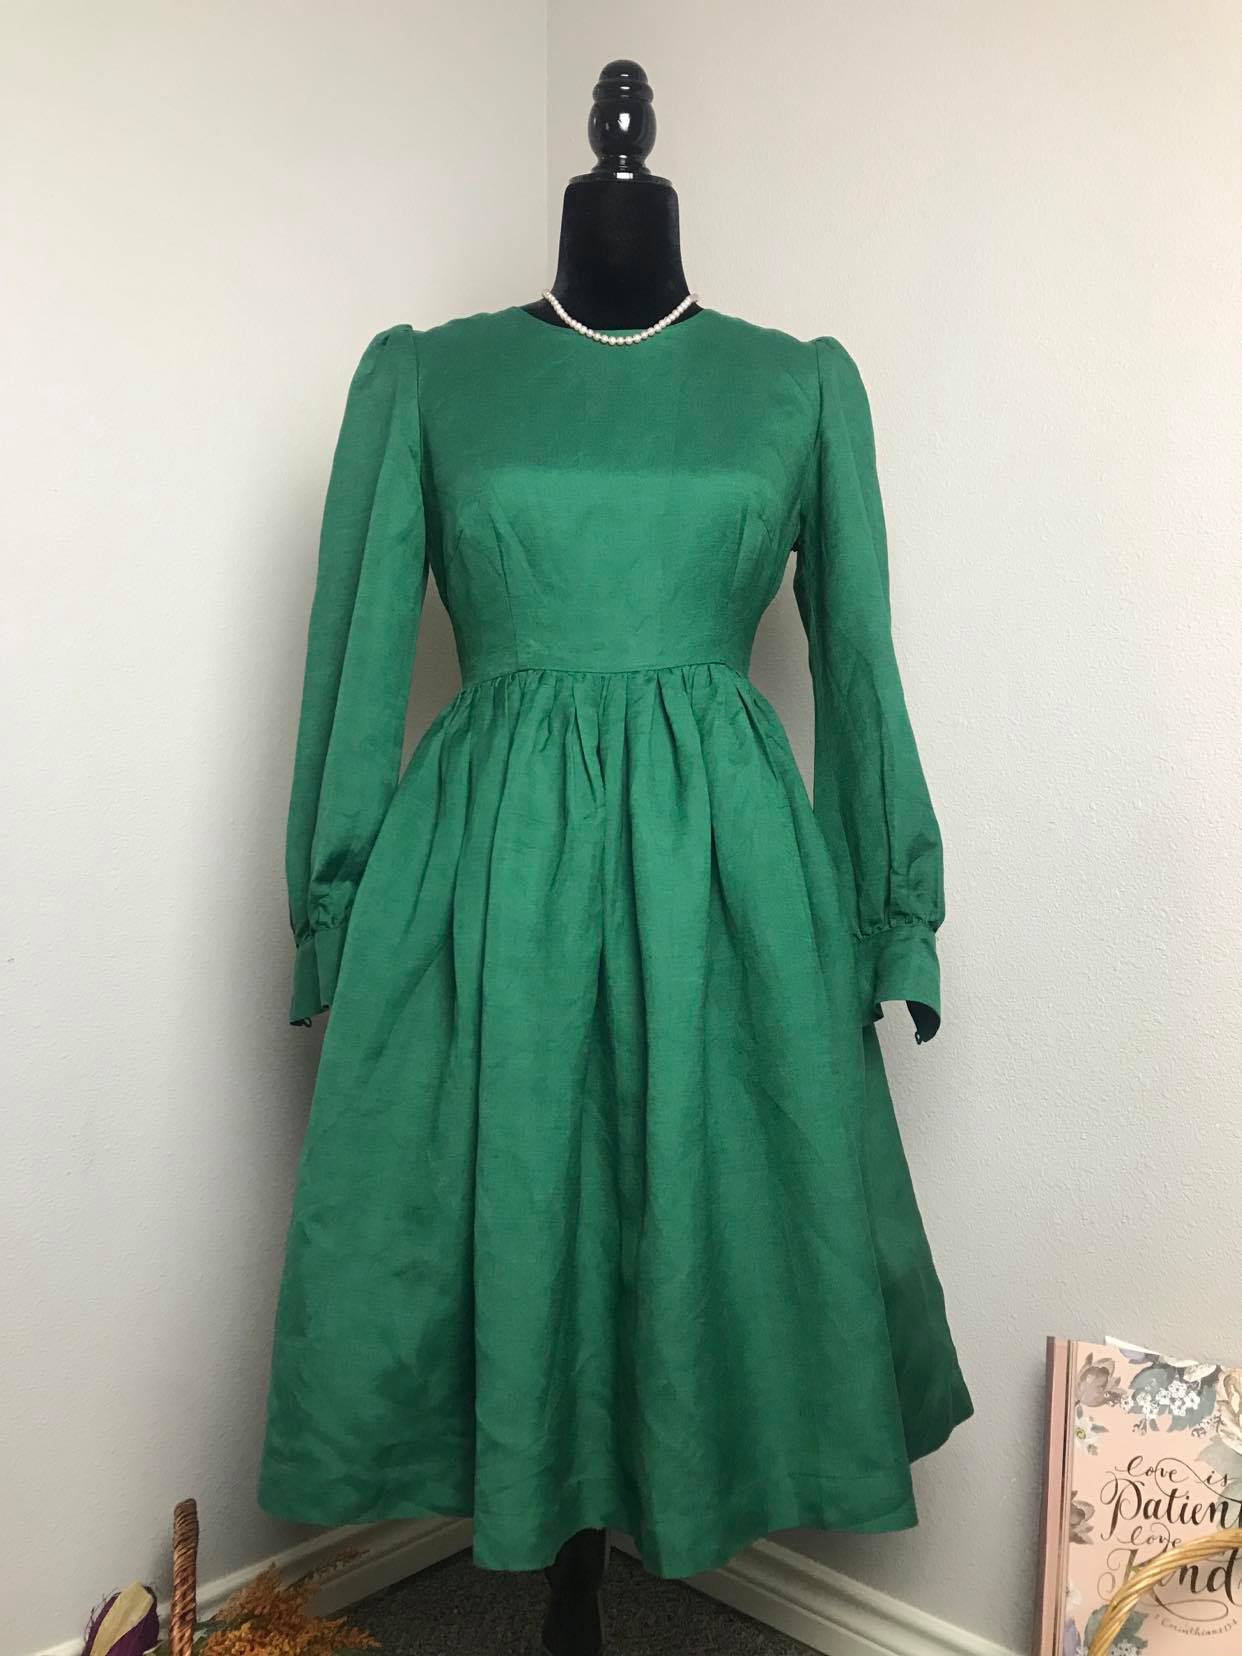 Loren Dress in Green Linen - Shop women style vintage, Audrey Hepburn jackets online -Christine